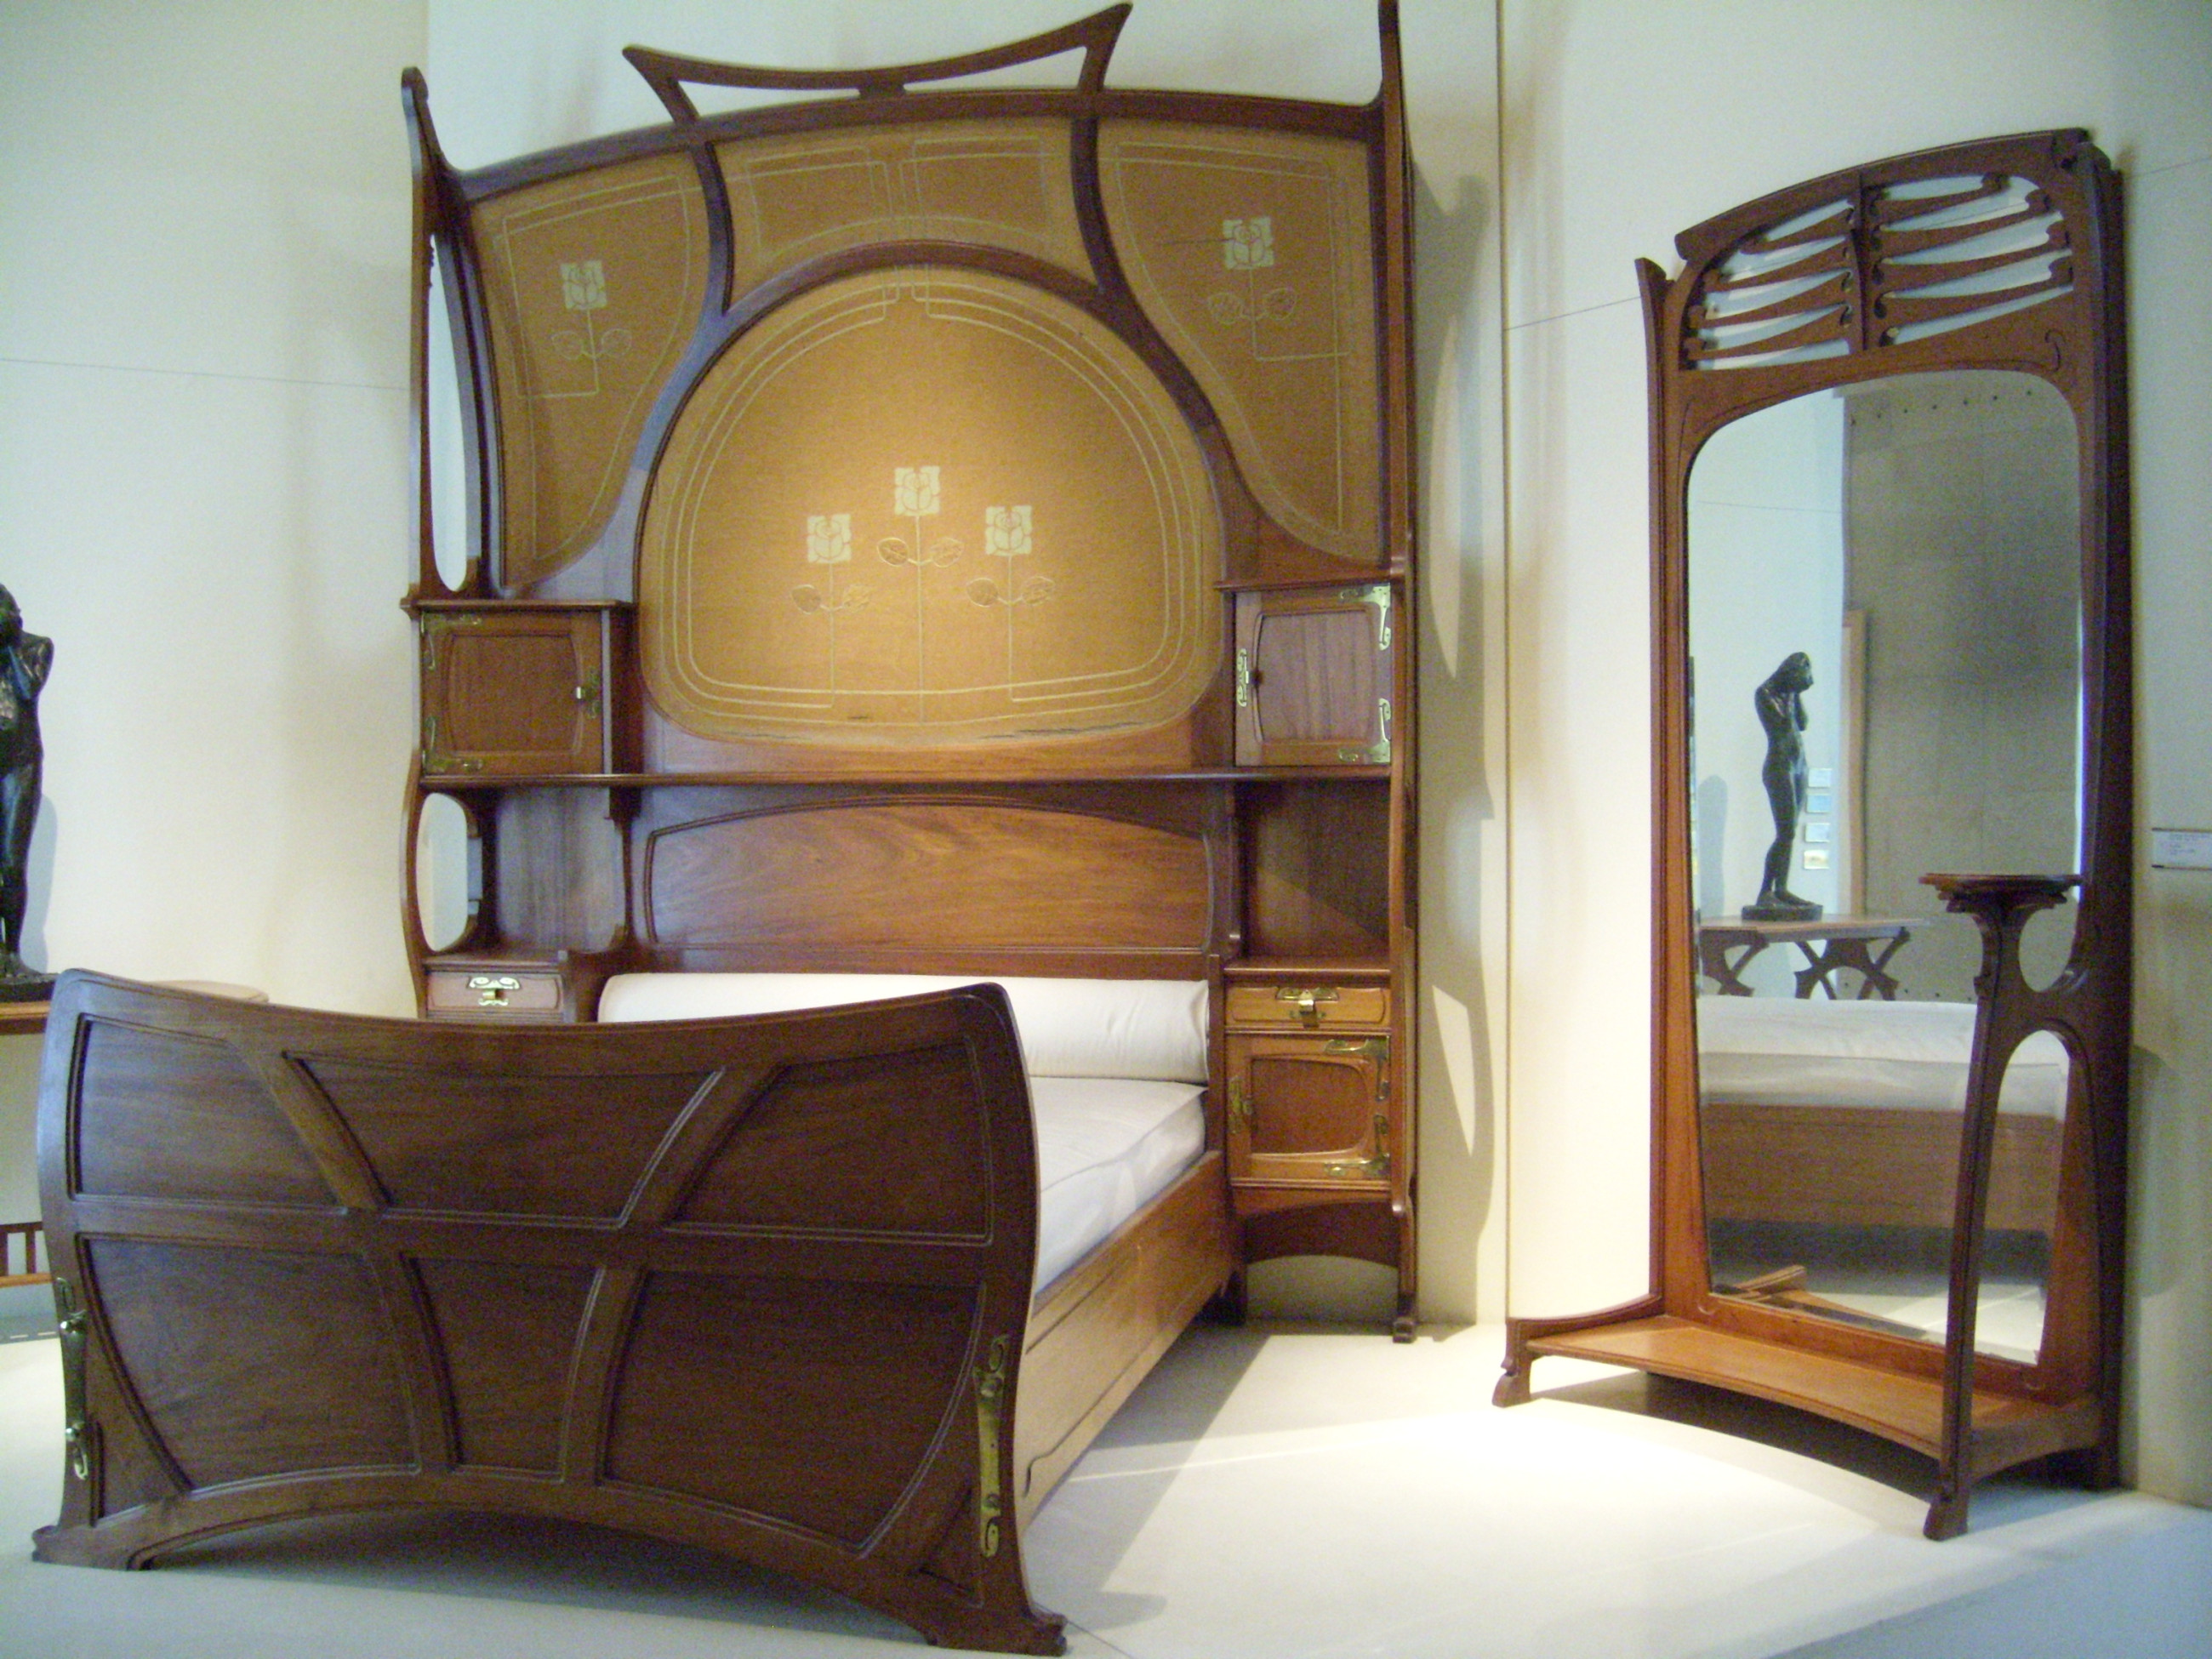 Art Nouveau style furniture